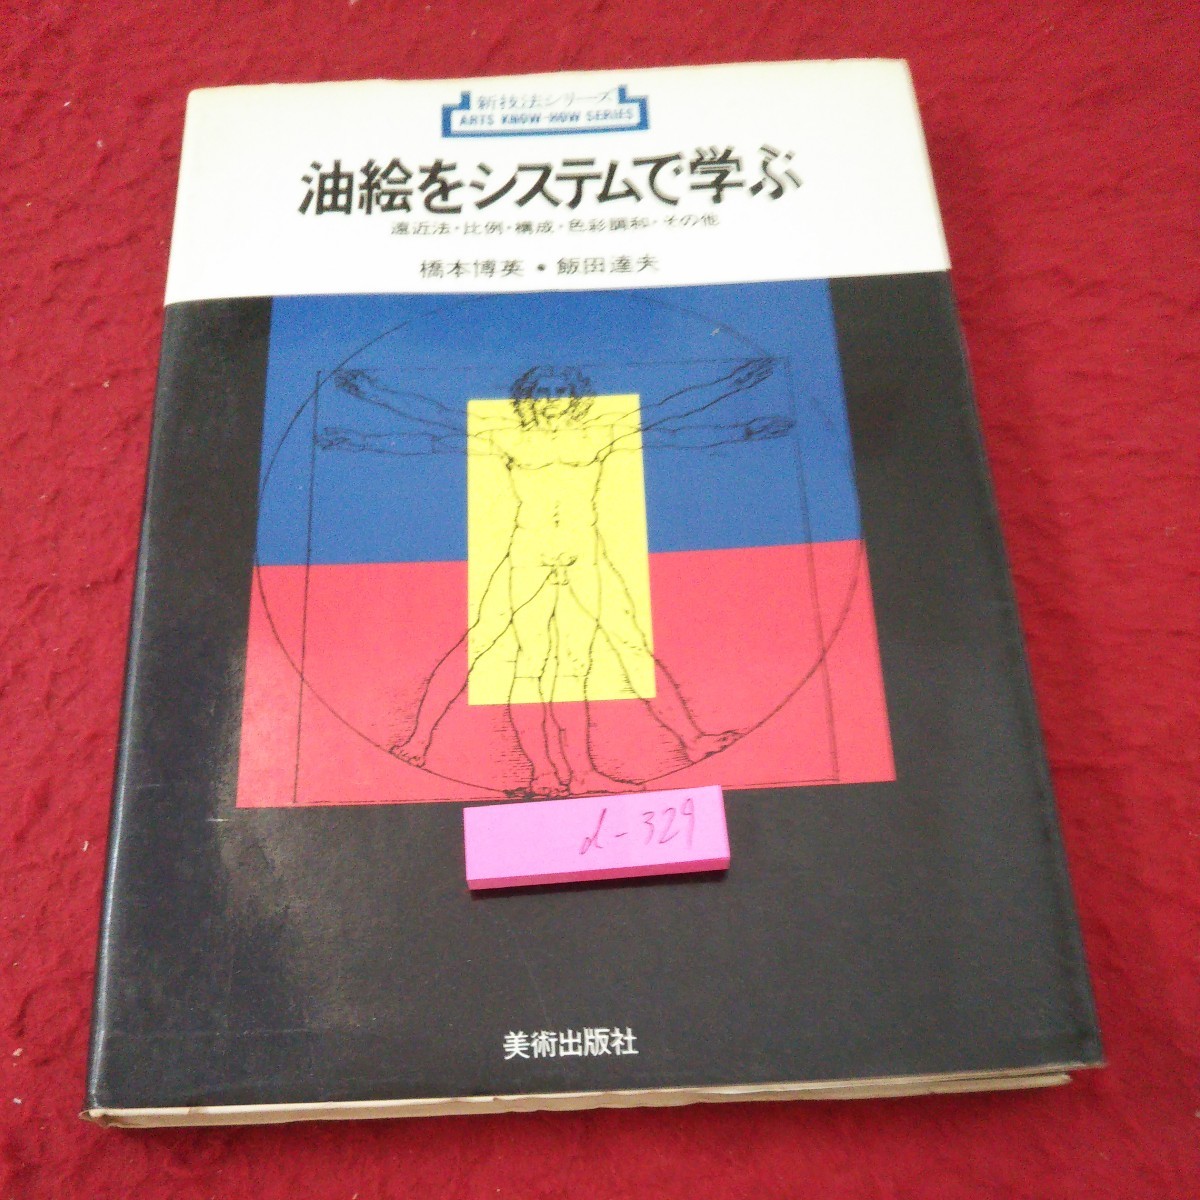 d-329 신기술 시리즈 시스템 퍼스펙티브를 활용한 유화 학습, 비율, 구성, 색상 조화, 등 하시모토 히로히데, 이이다 타츠오 미술 출판사, Ltd. 1983년 발행 *5, 미술, 오락, 그림, 기술서